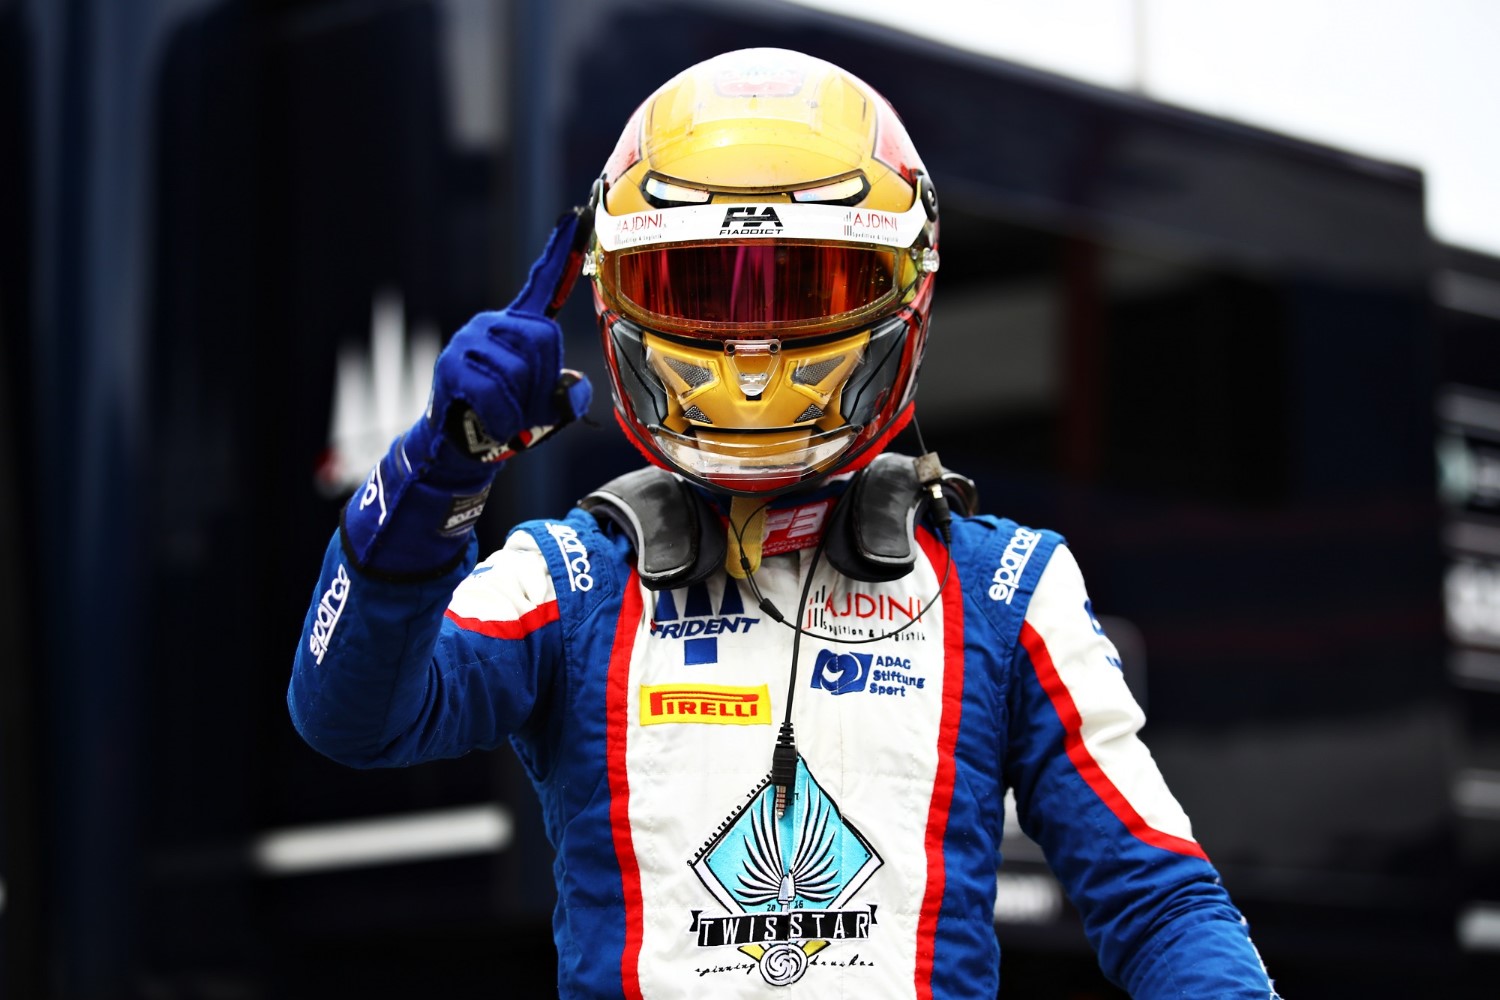 Zendeli roars to dominant first F3 win – AutoRacing1.com